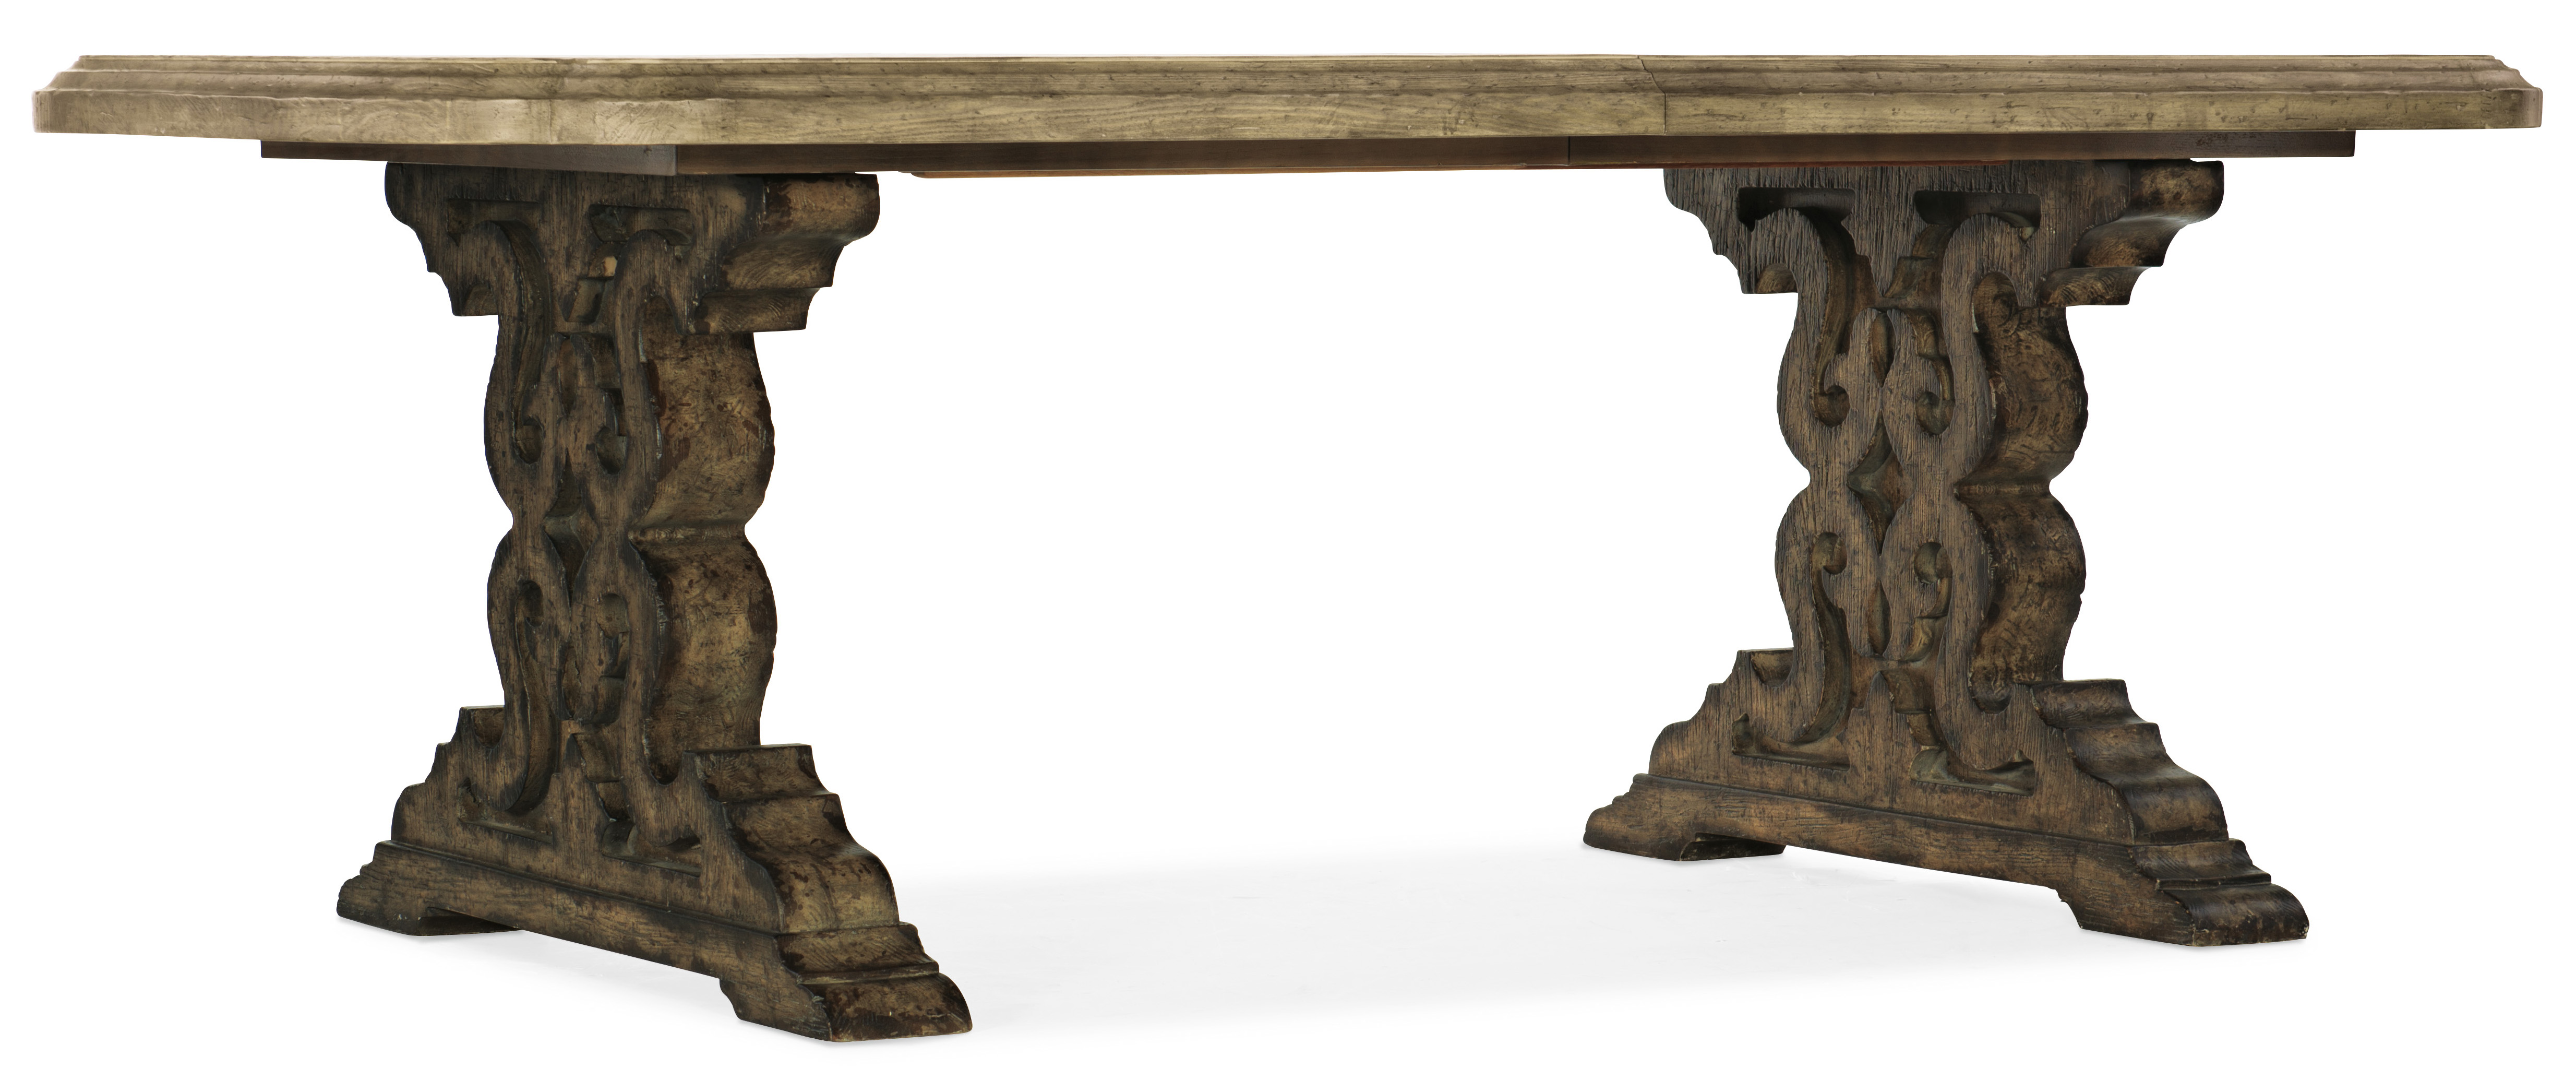 Picture of LeVieux Double Pedestal Table 86”